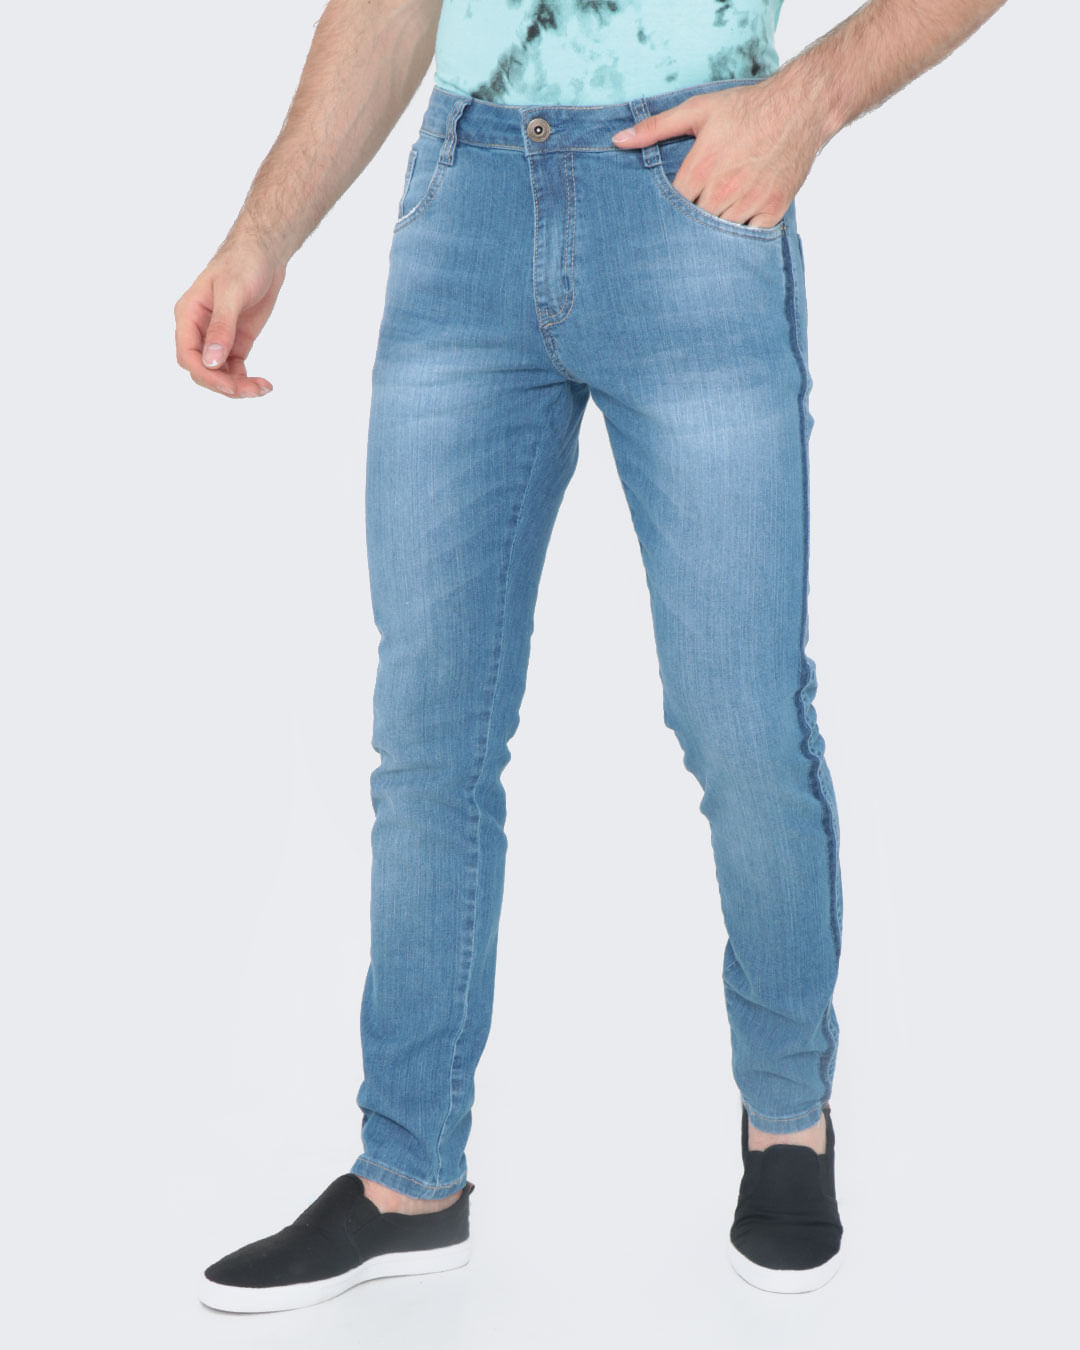 Calca-Jeans-Skinny-Masculina-Azul-Claro